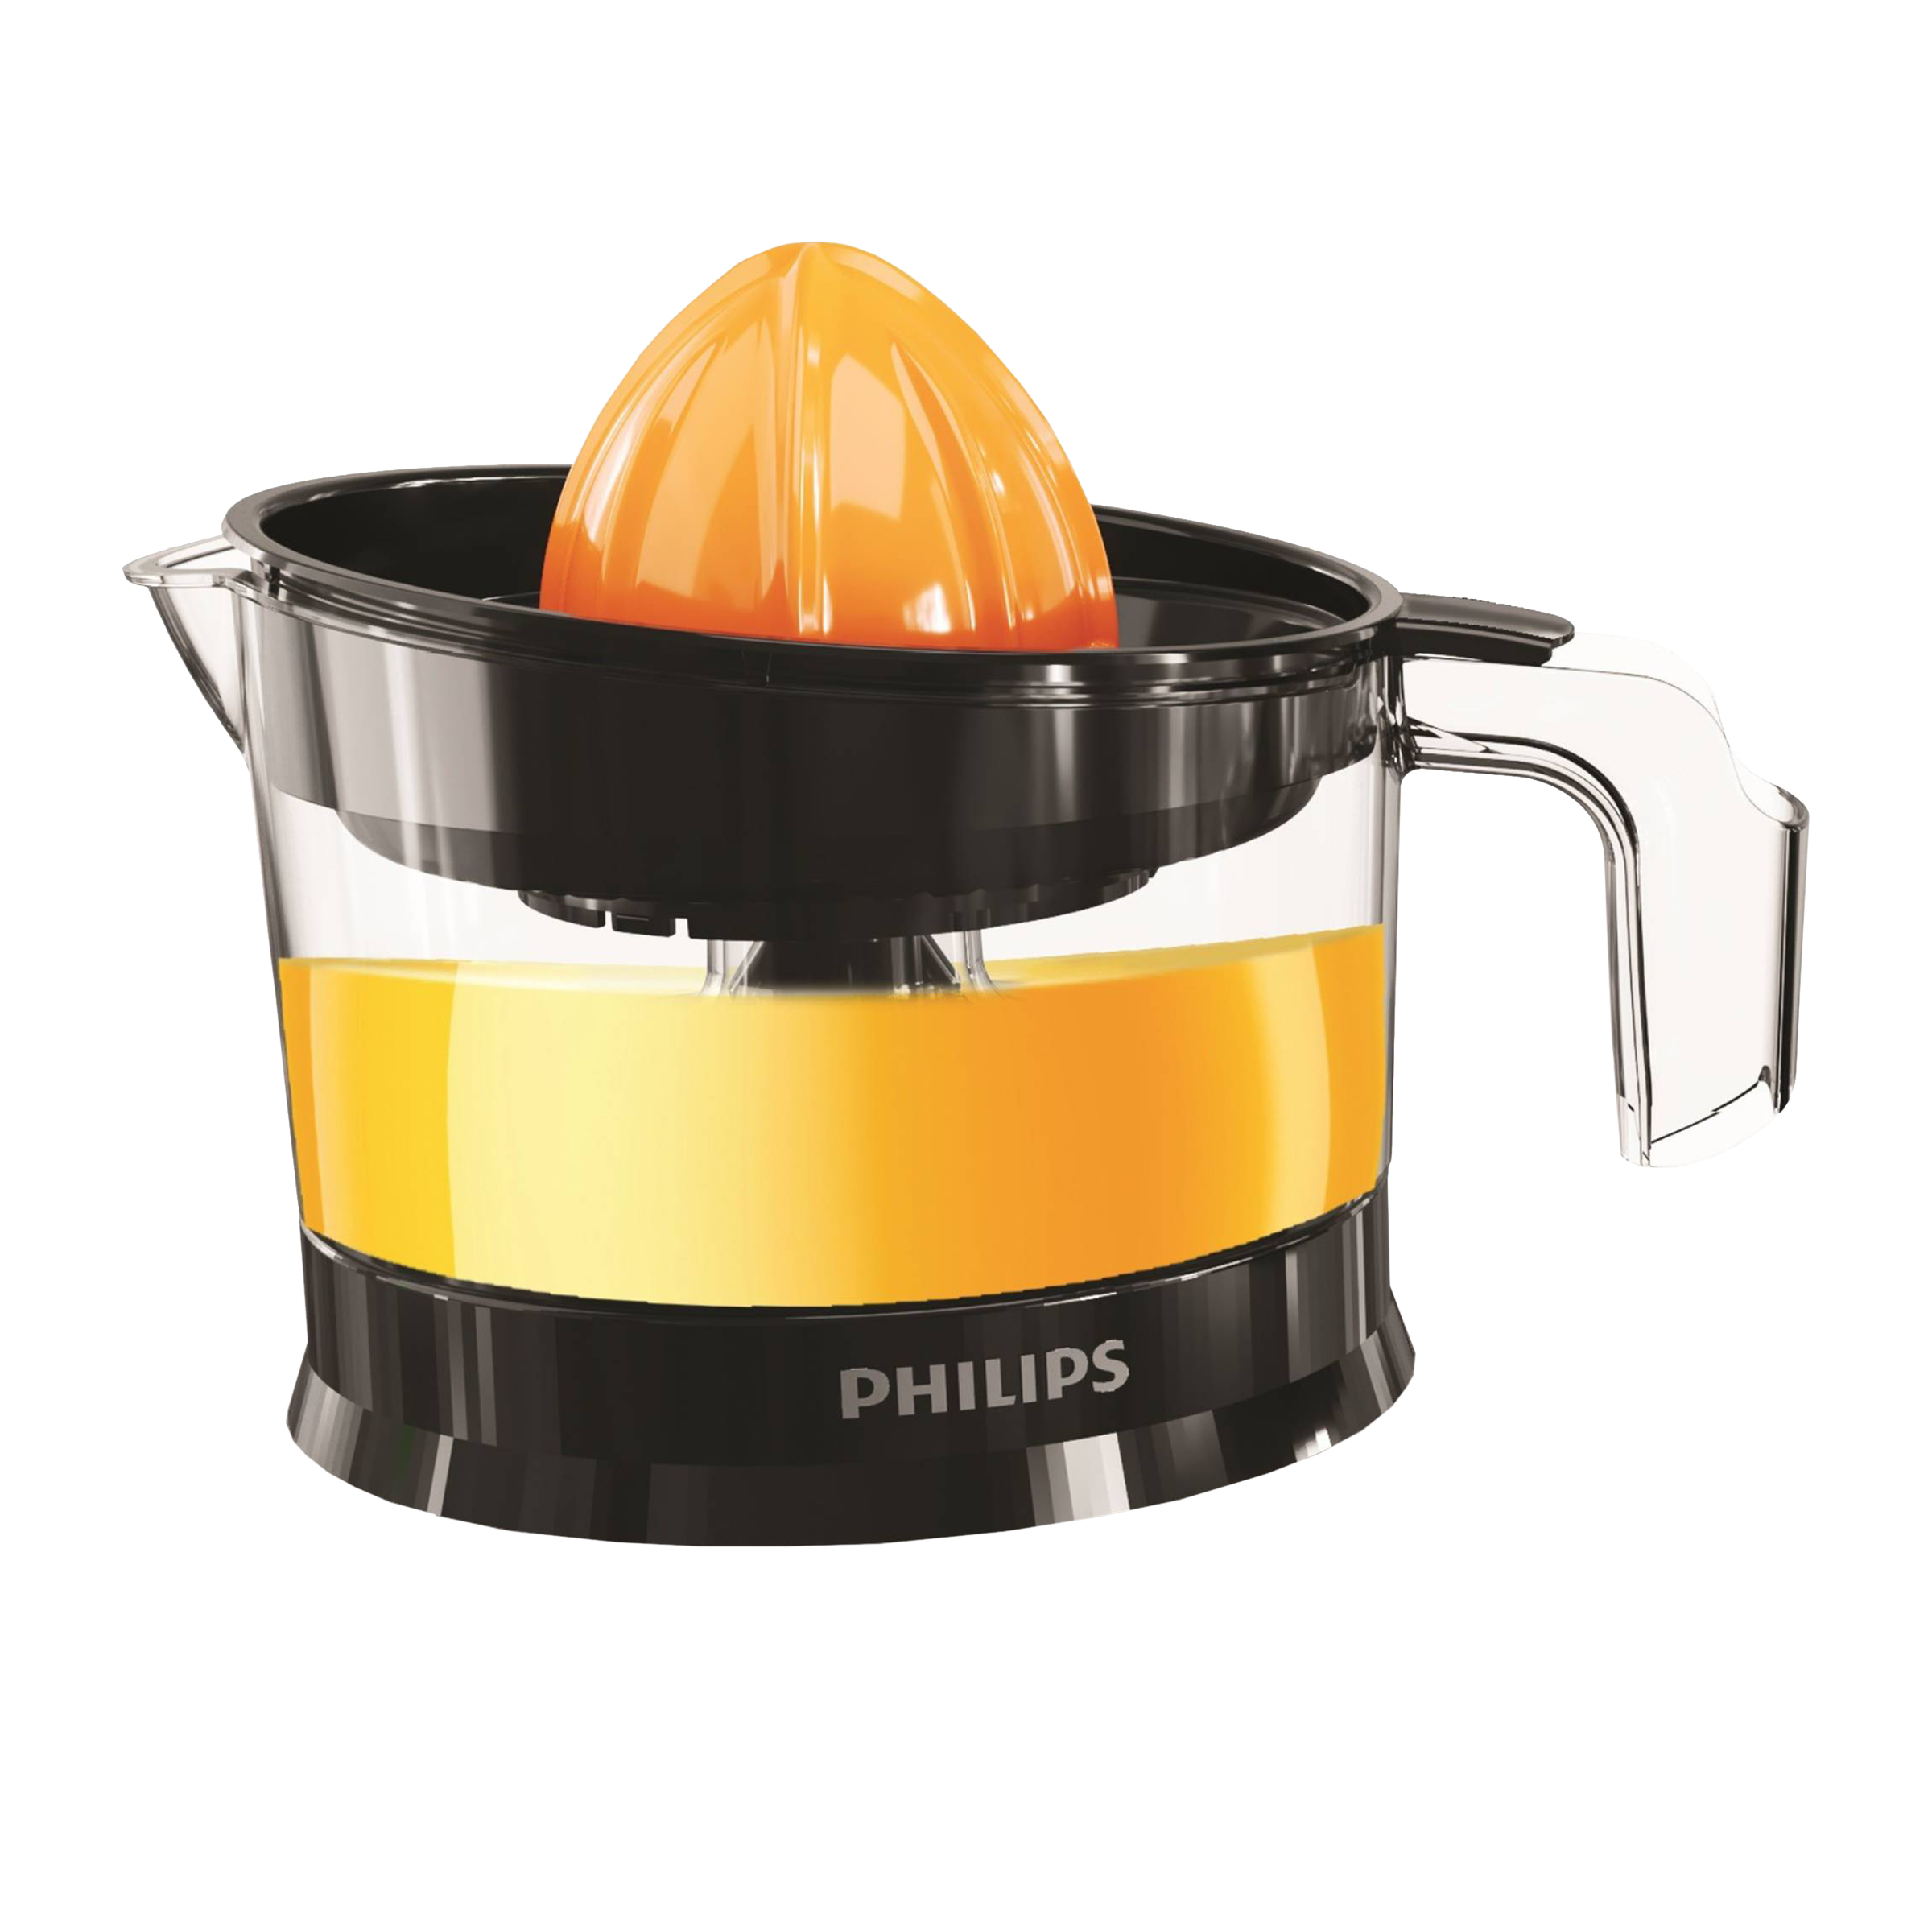 Buy Philips Daily Collection 25 Watt 1 Jar Citrus Press (2 Way Rotation, Black/Orange) Online - Croma